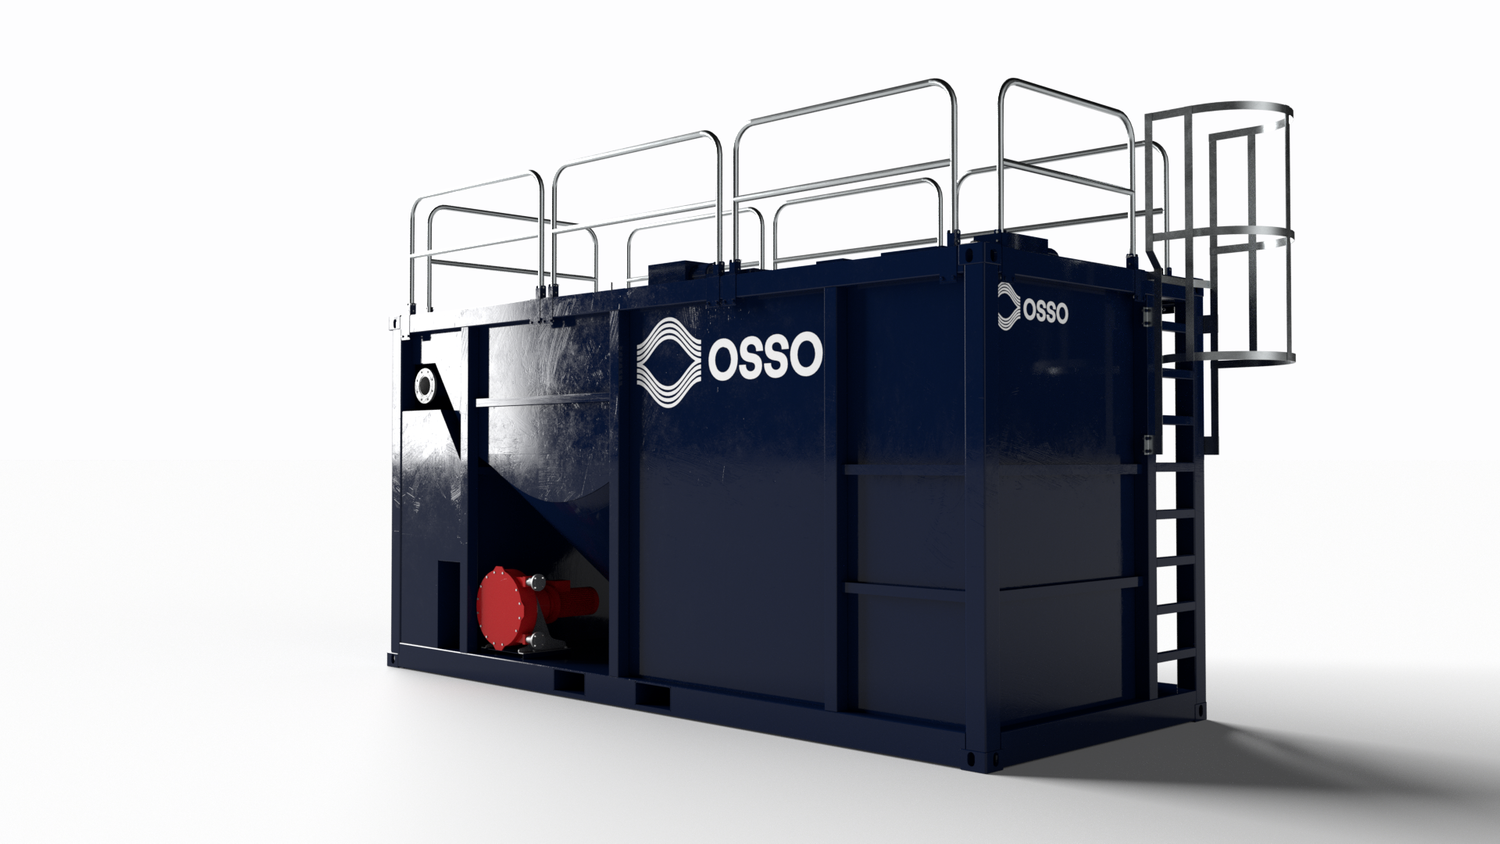 OSSO Ltd.